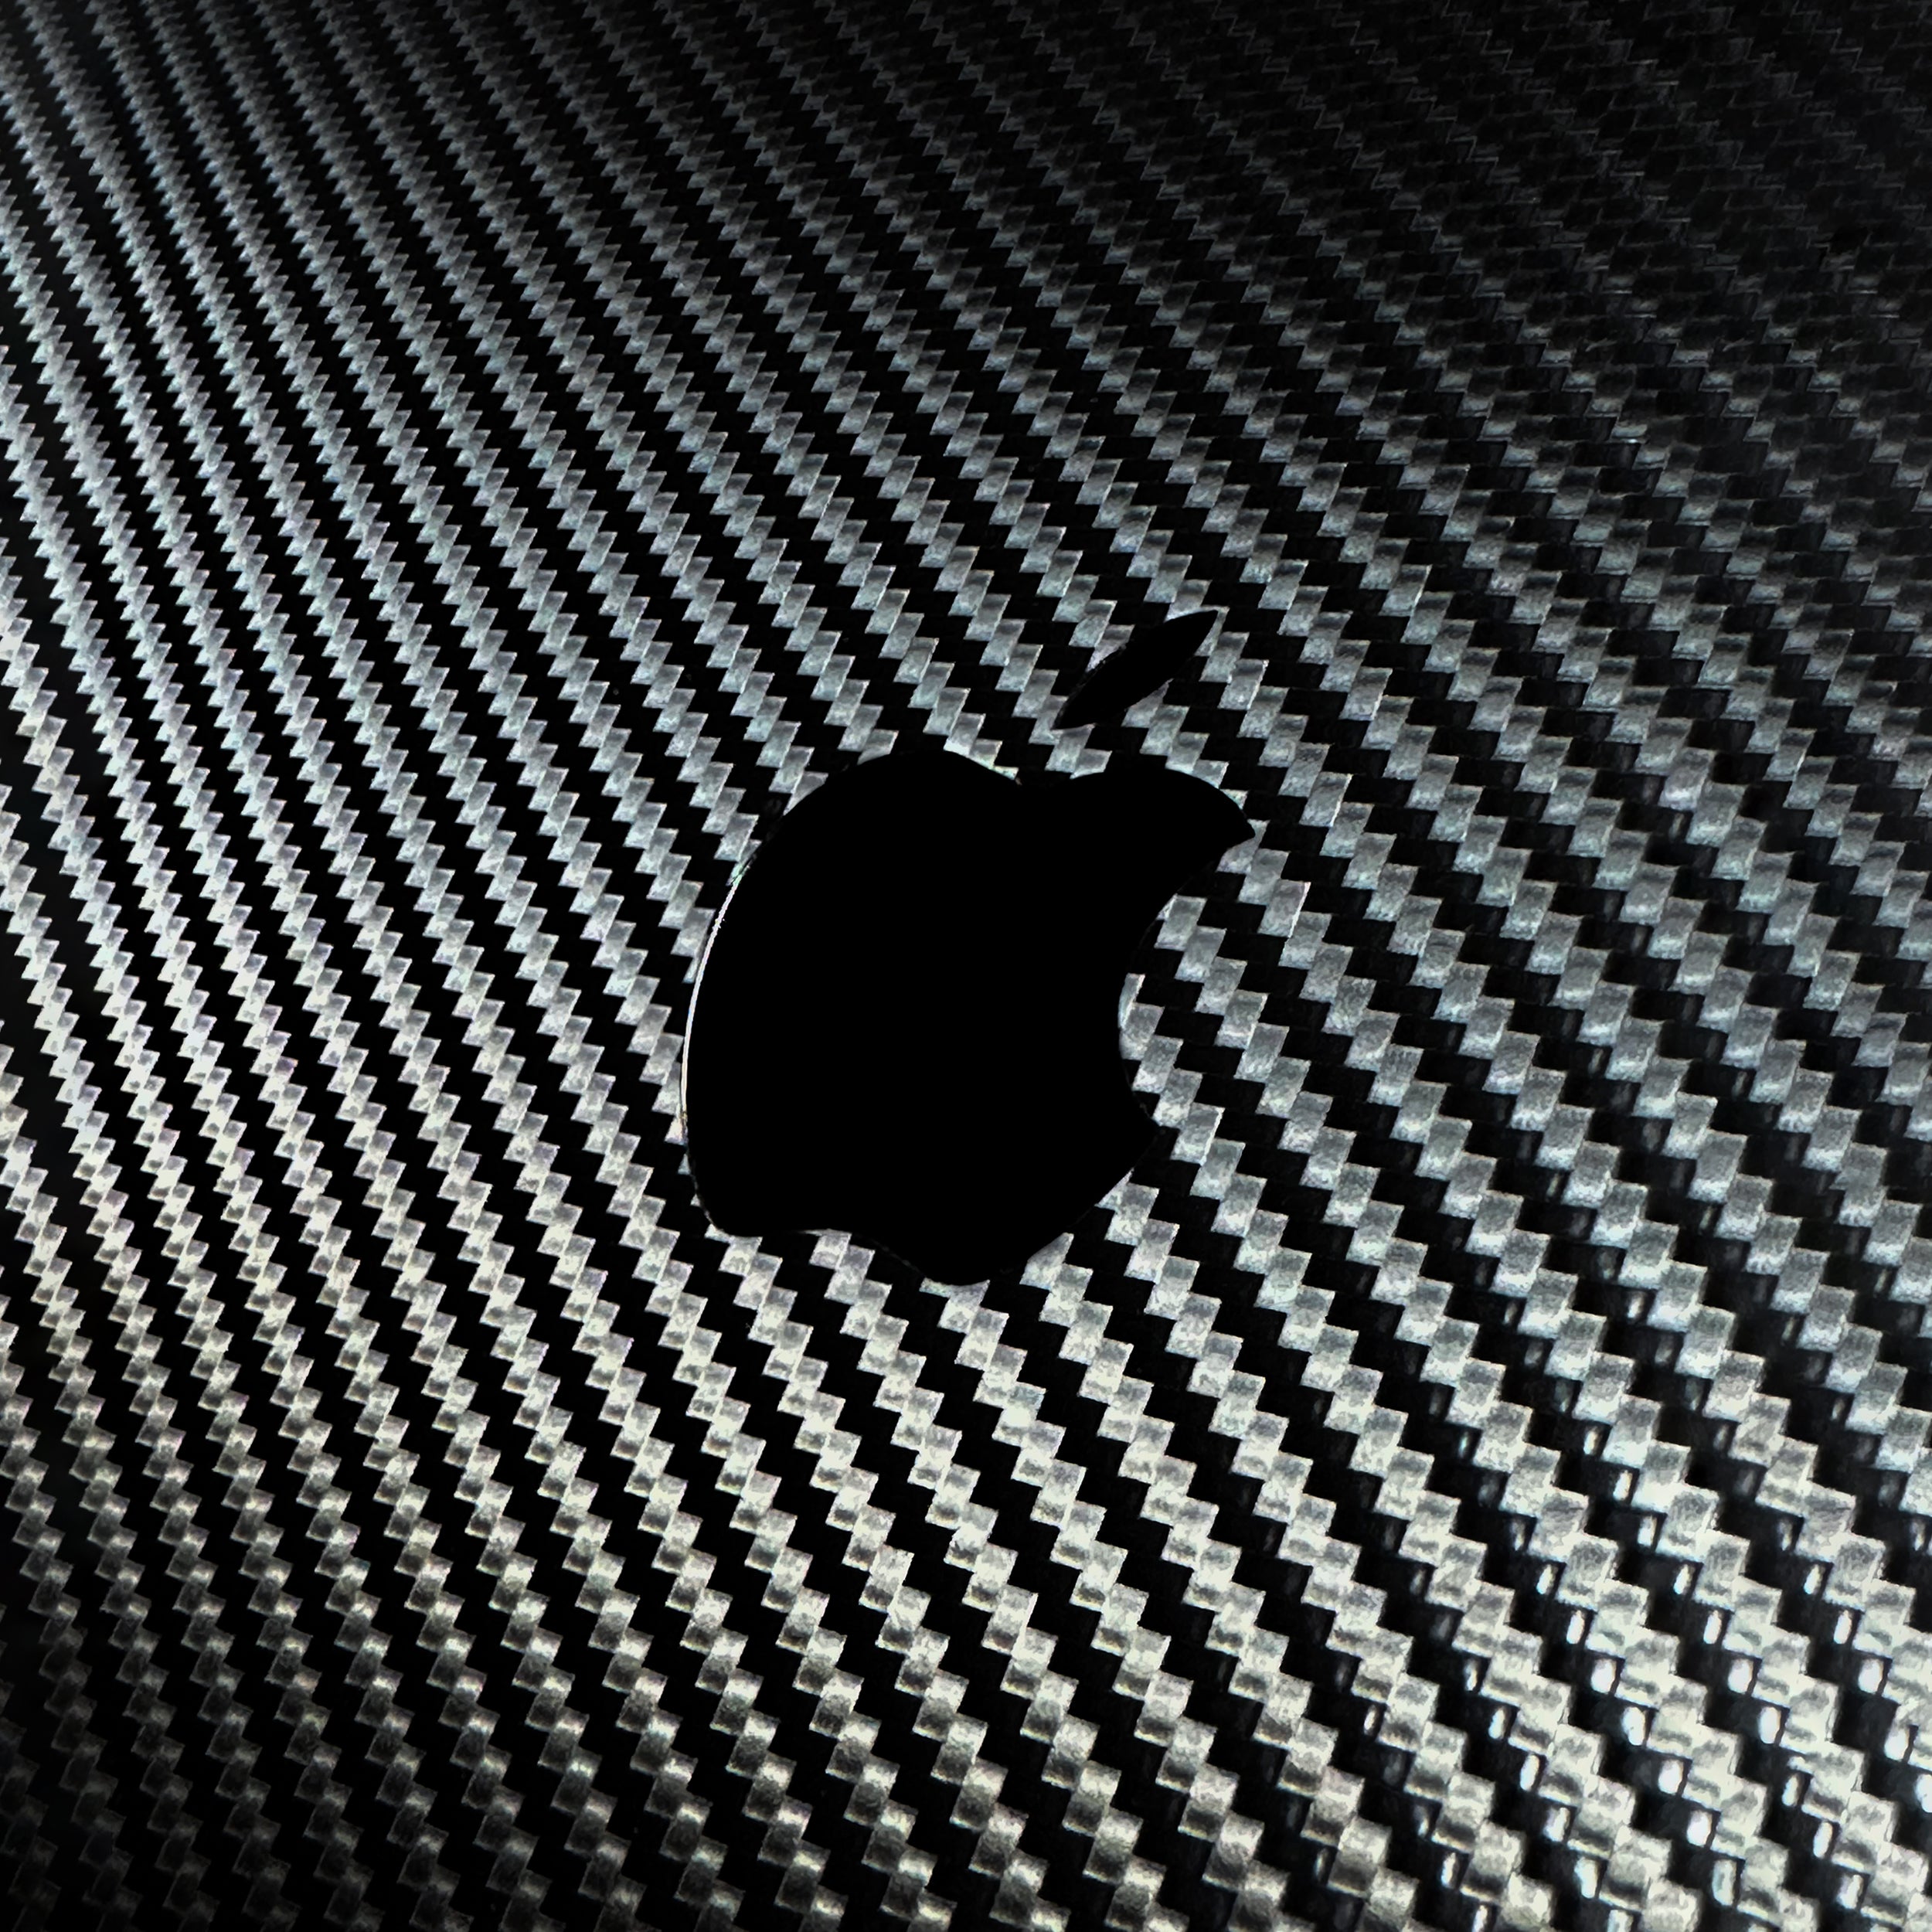 Black Carbon (MacBook Skin)